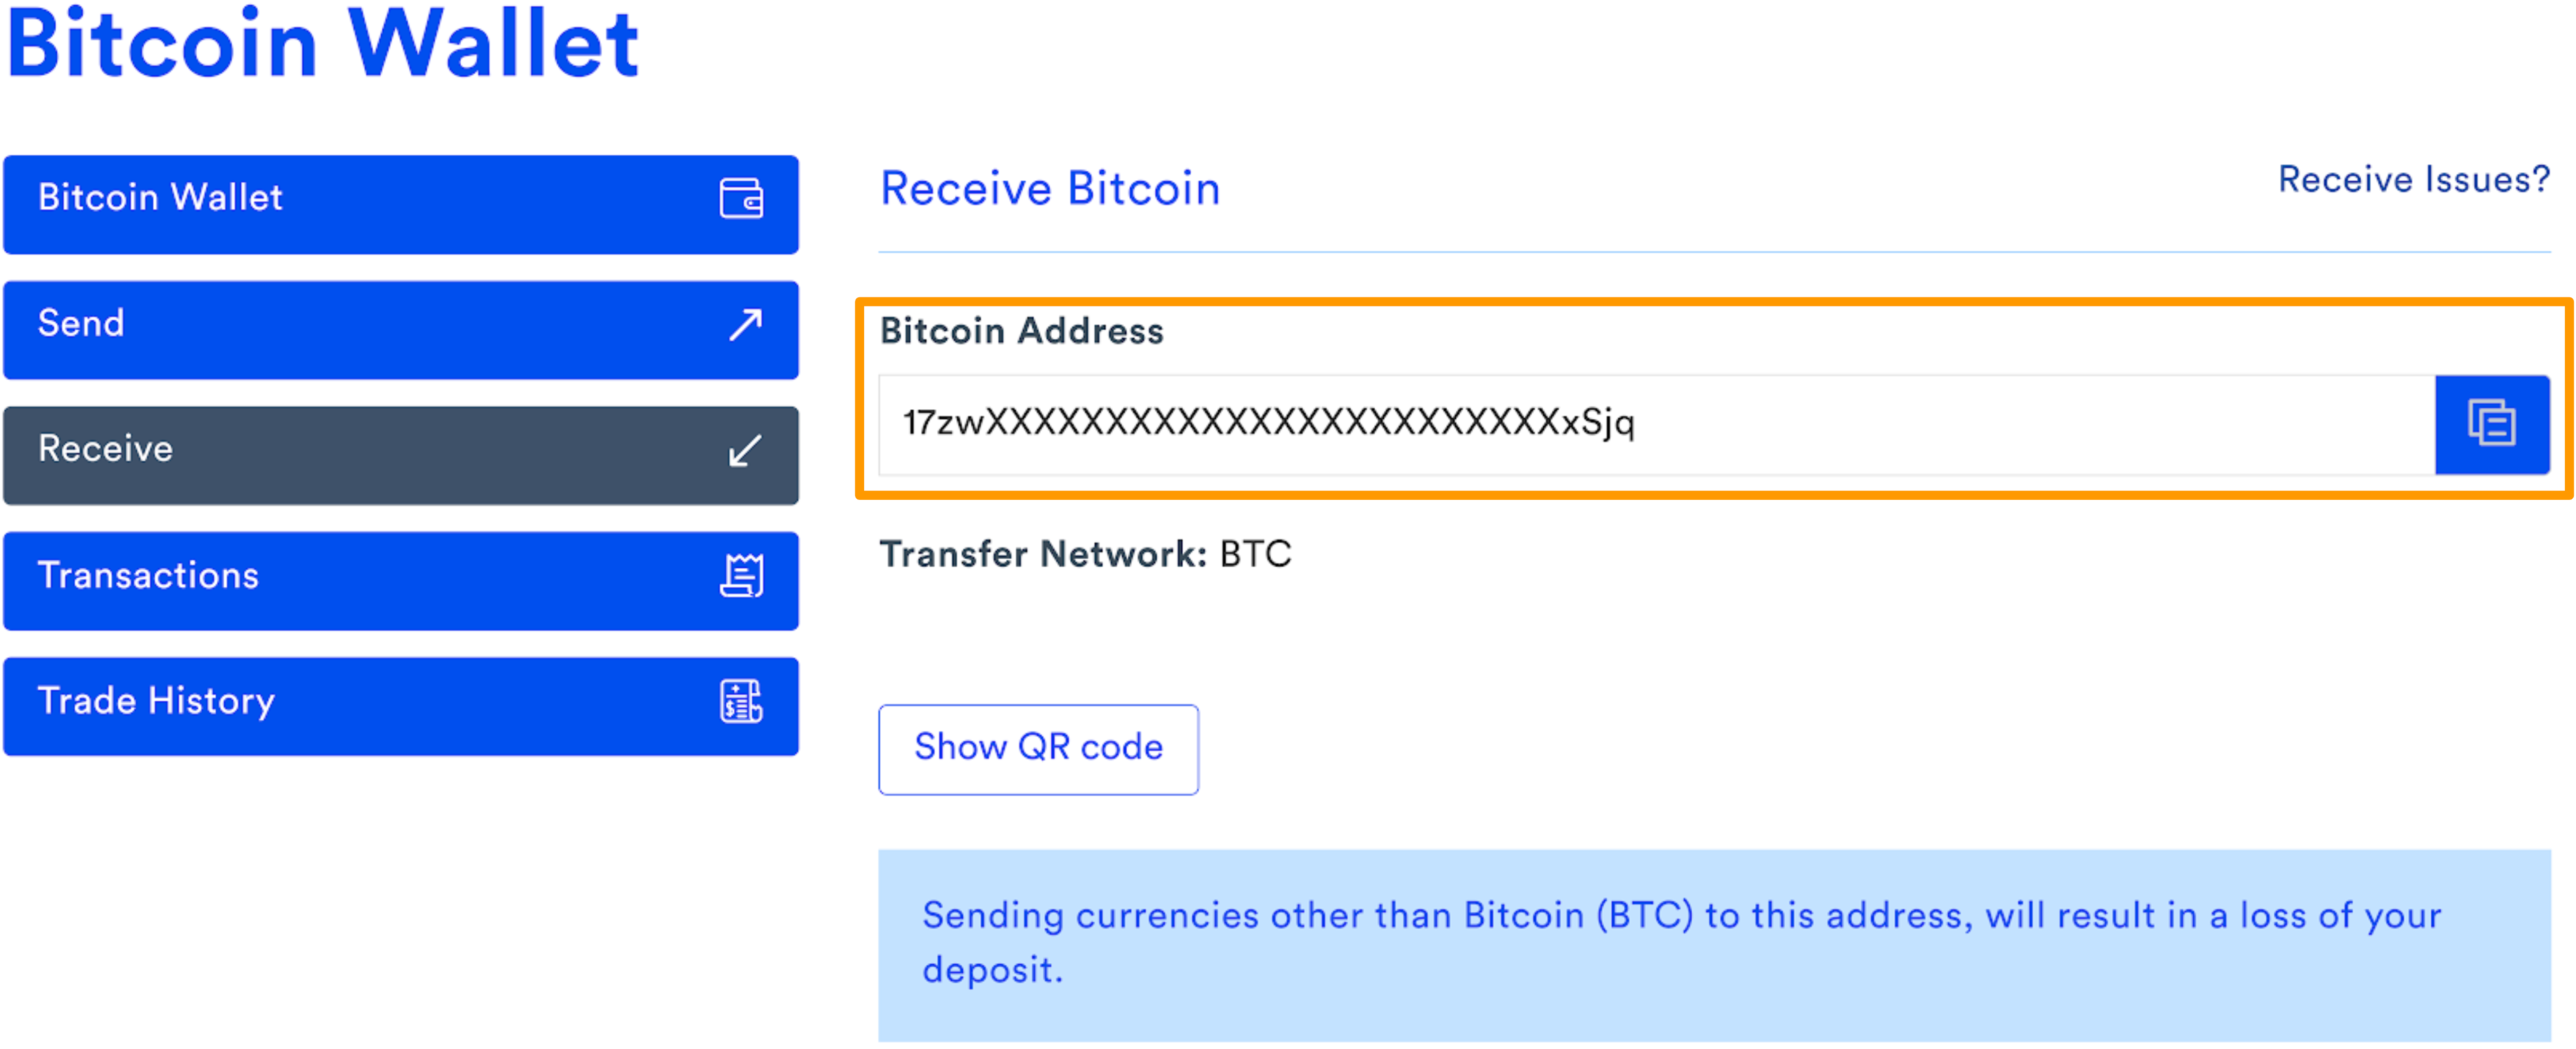 Receiving_Wallet_-_BTC_Wallet_Address_Example.png